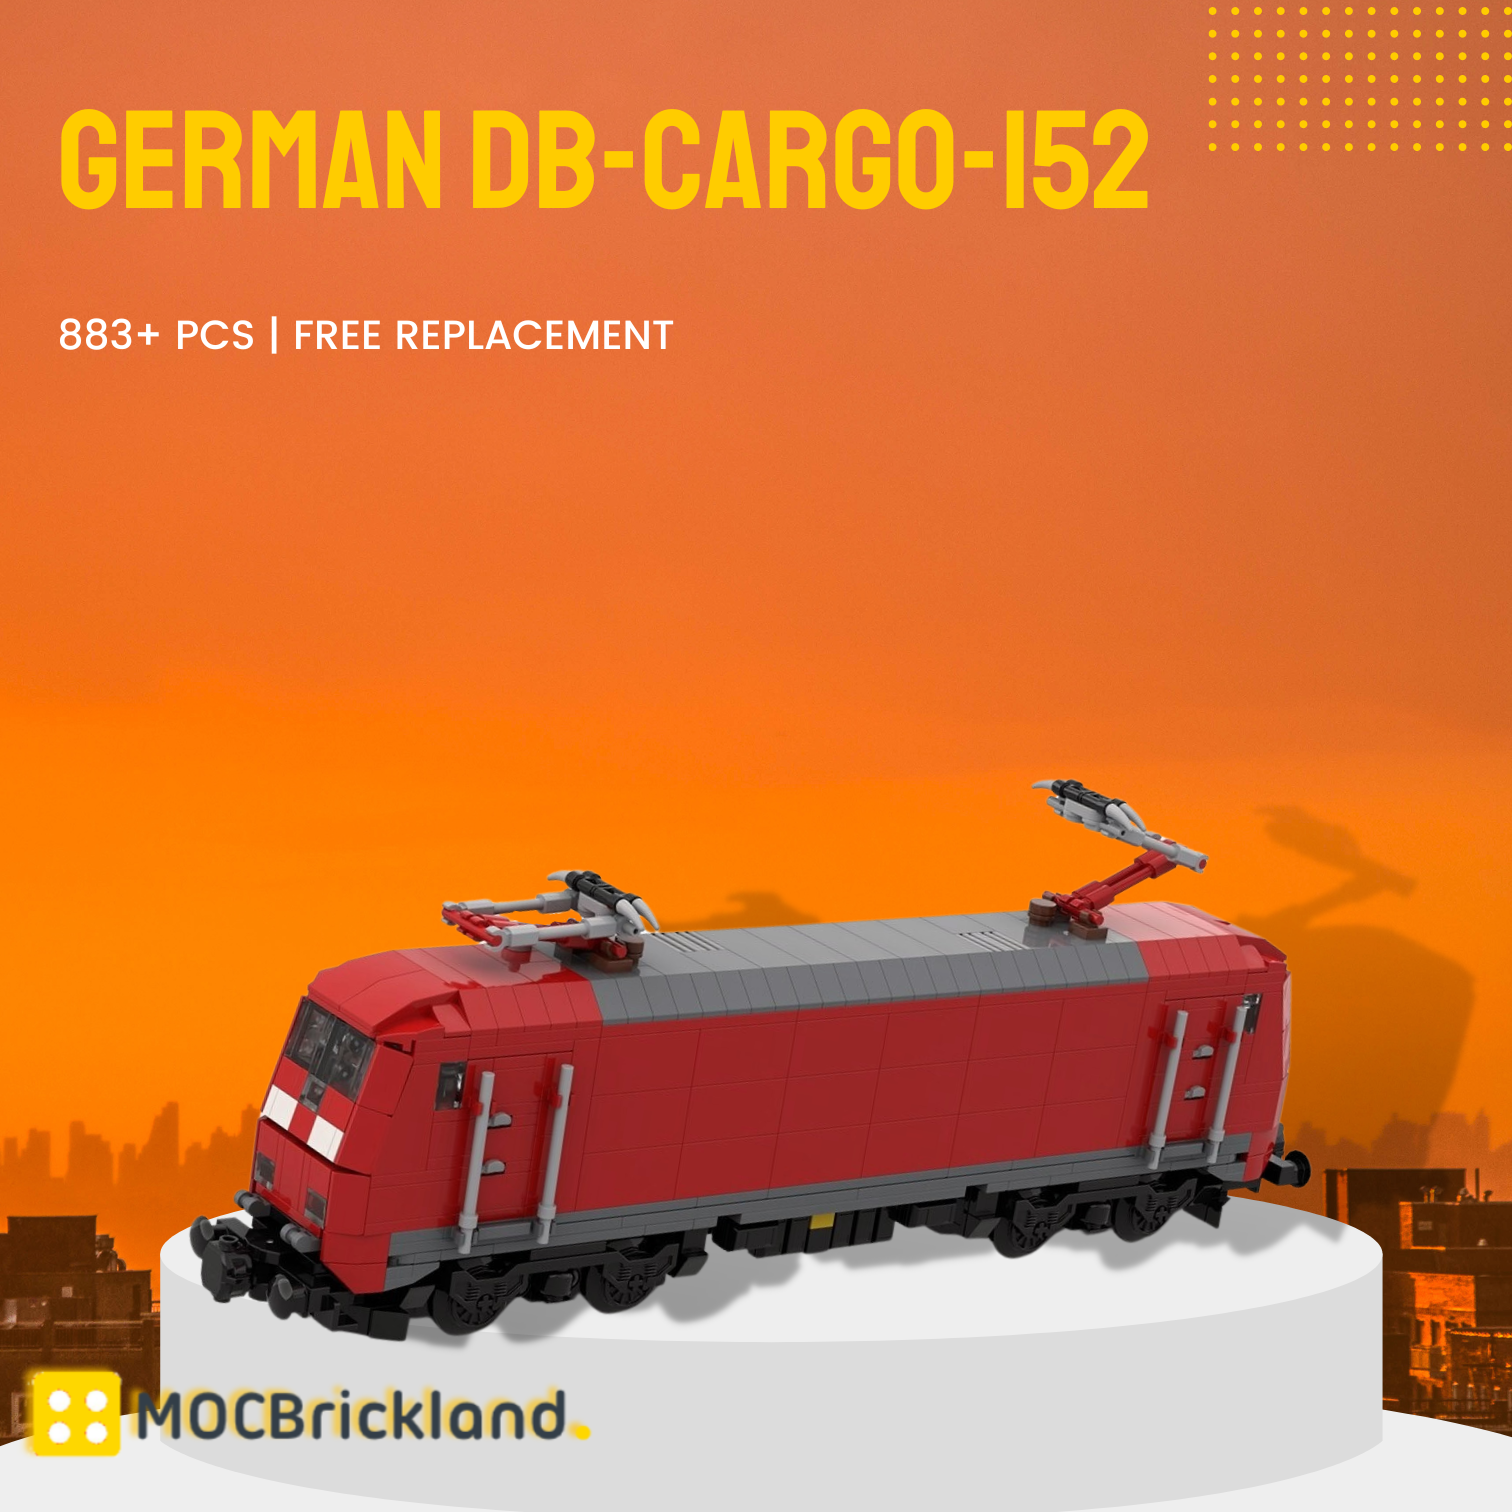 German DB-Cargo-152 MOC-89520 Technic With 883PCS